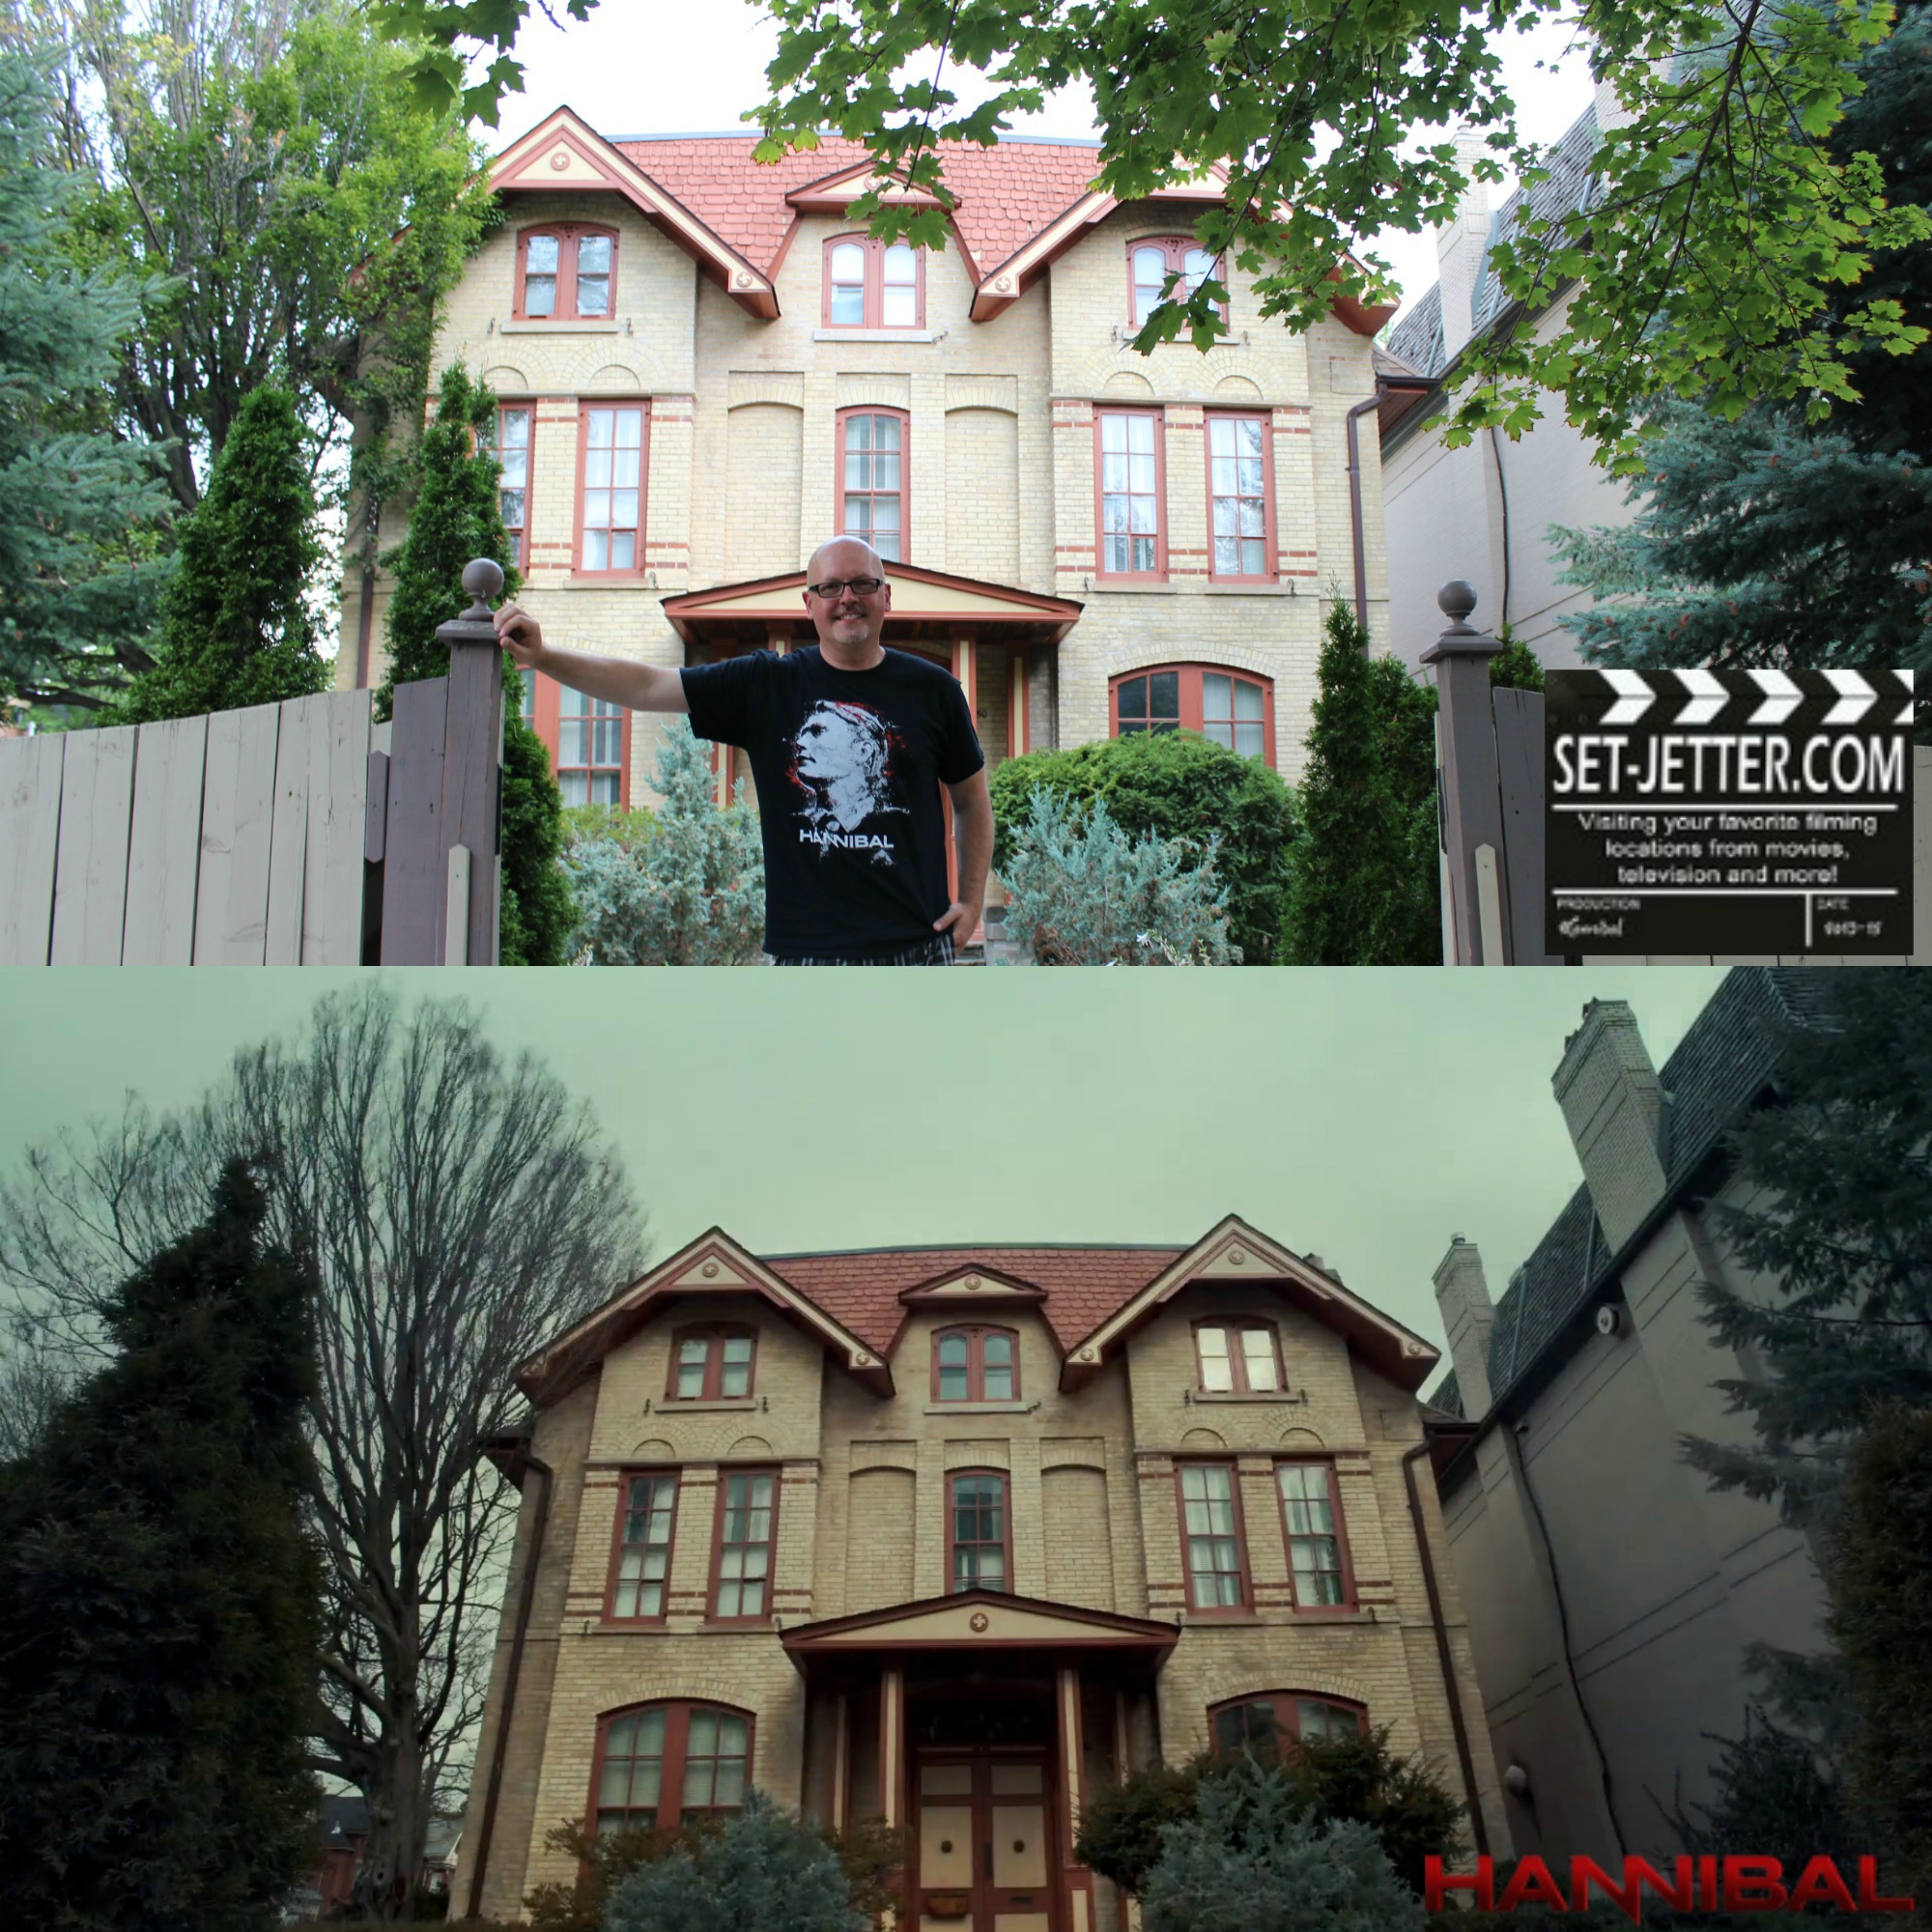 Hannibal house 01.jpg